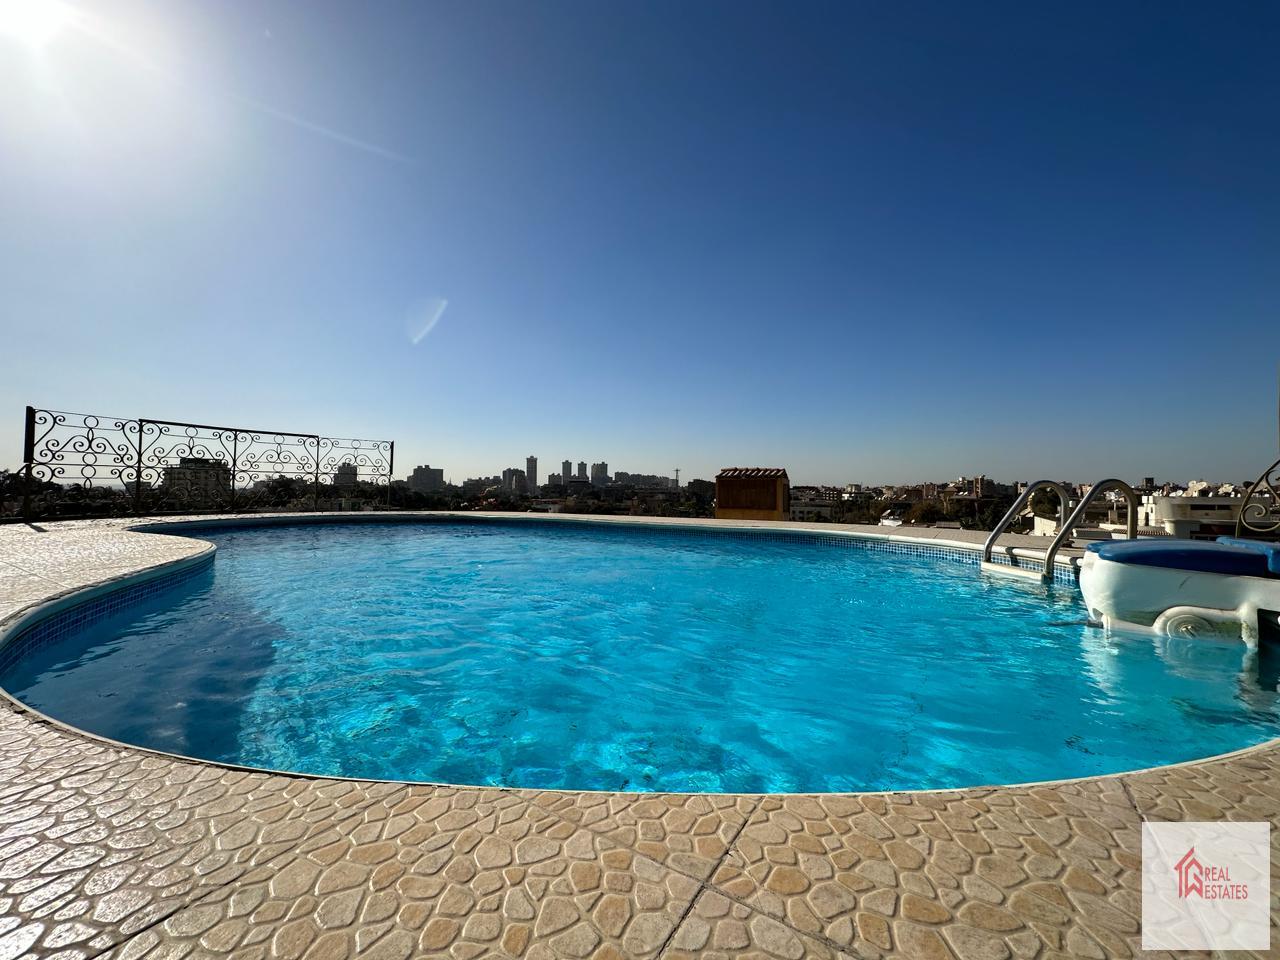 Maadi Sarayate 365 meter apartment rent sale shared swimming pool cairo egypt miser